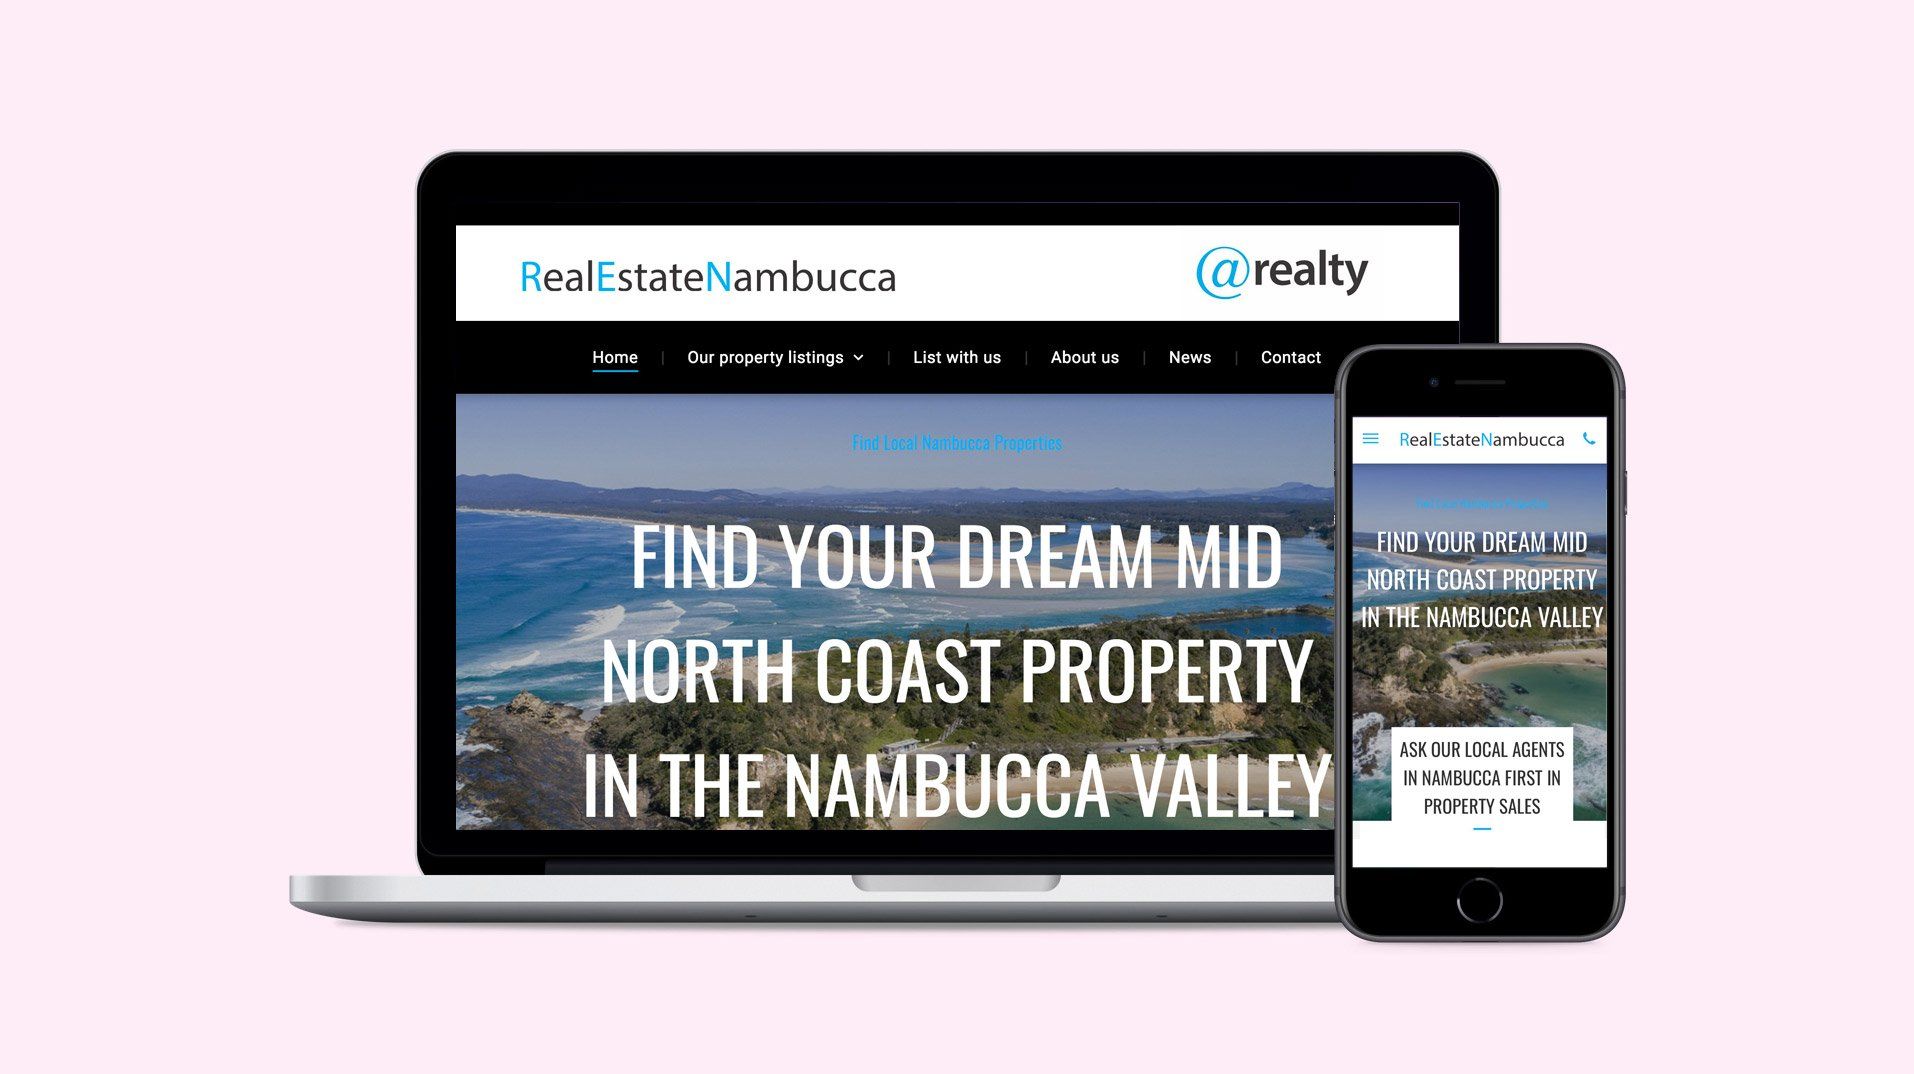 Real estate Nabucca Heads webdesign on desktop & mobile phone views (home page)